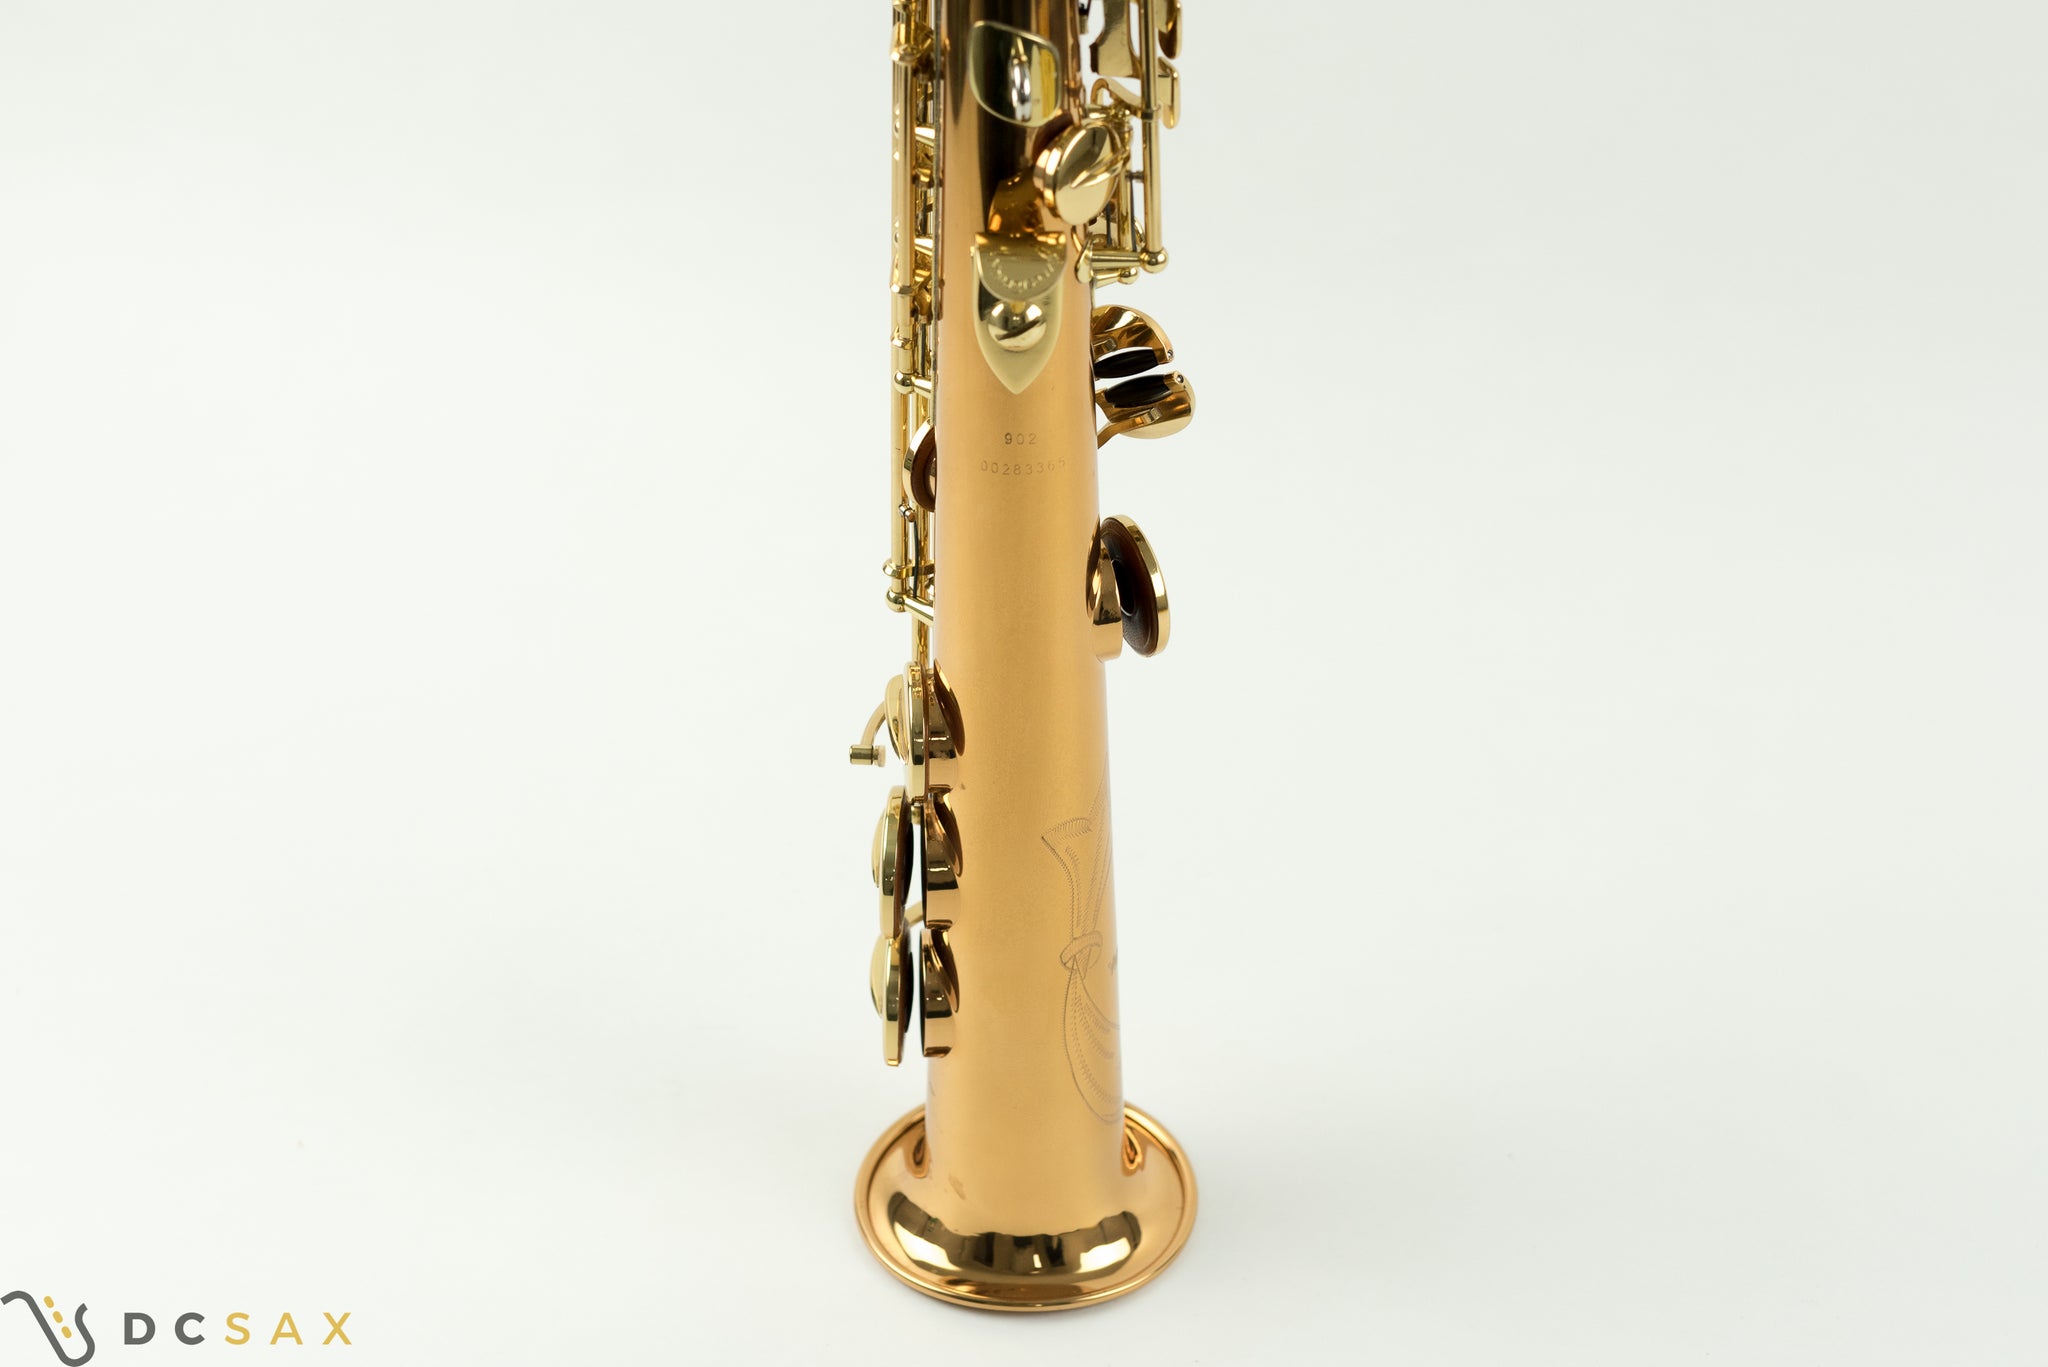 Yanagisawa S-902 Soprano Saxophone, Mint Condition